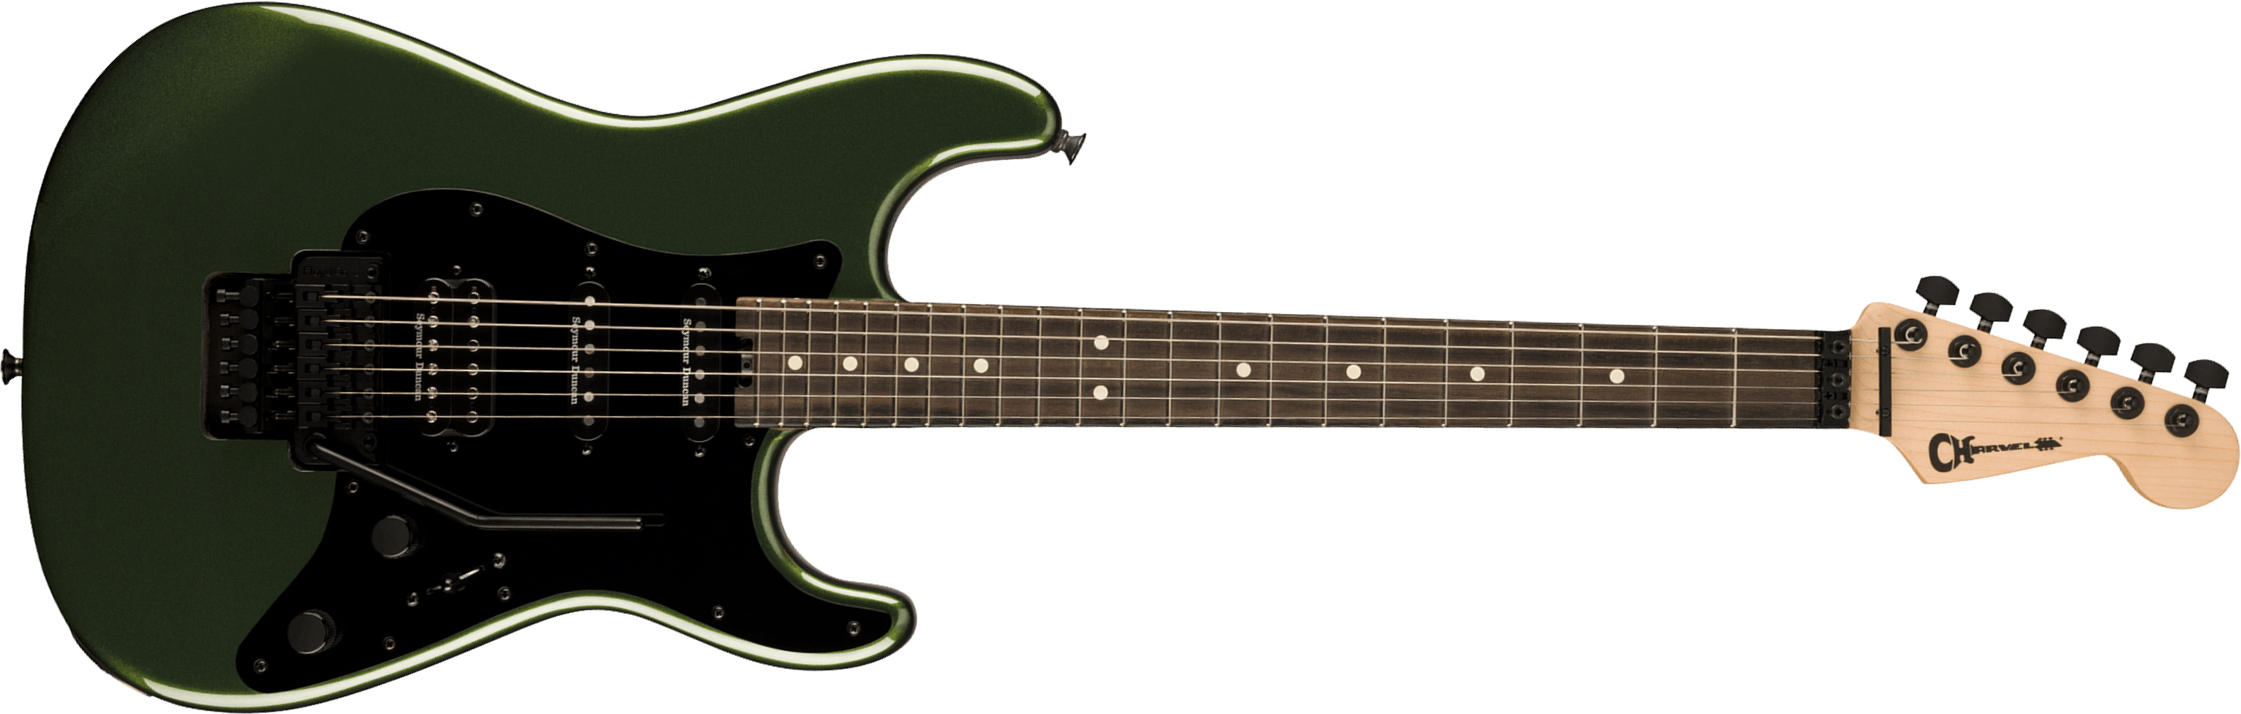 Charvel So-cal Style 1 Hss Fr E Pro-mod Seymour Duncan Eb - Lambo Green - Elektrische gitaar in Str-vorm - Main picture